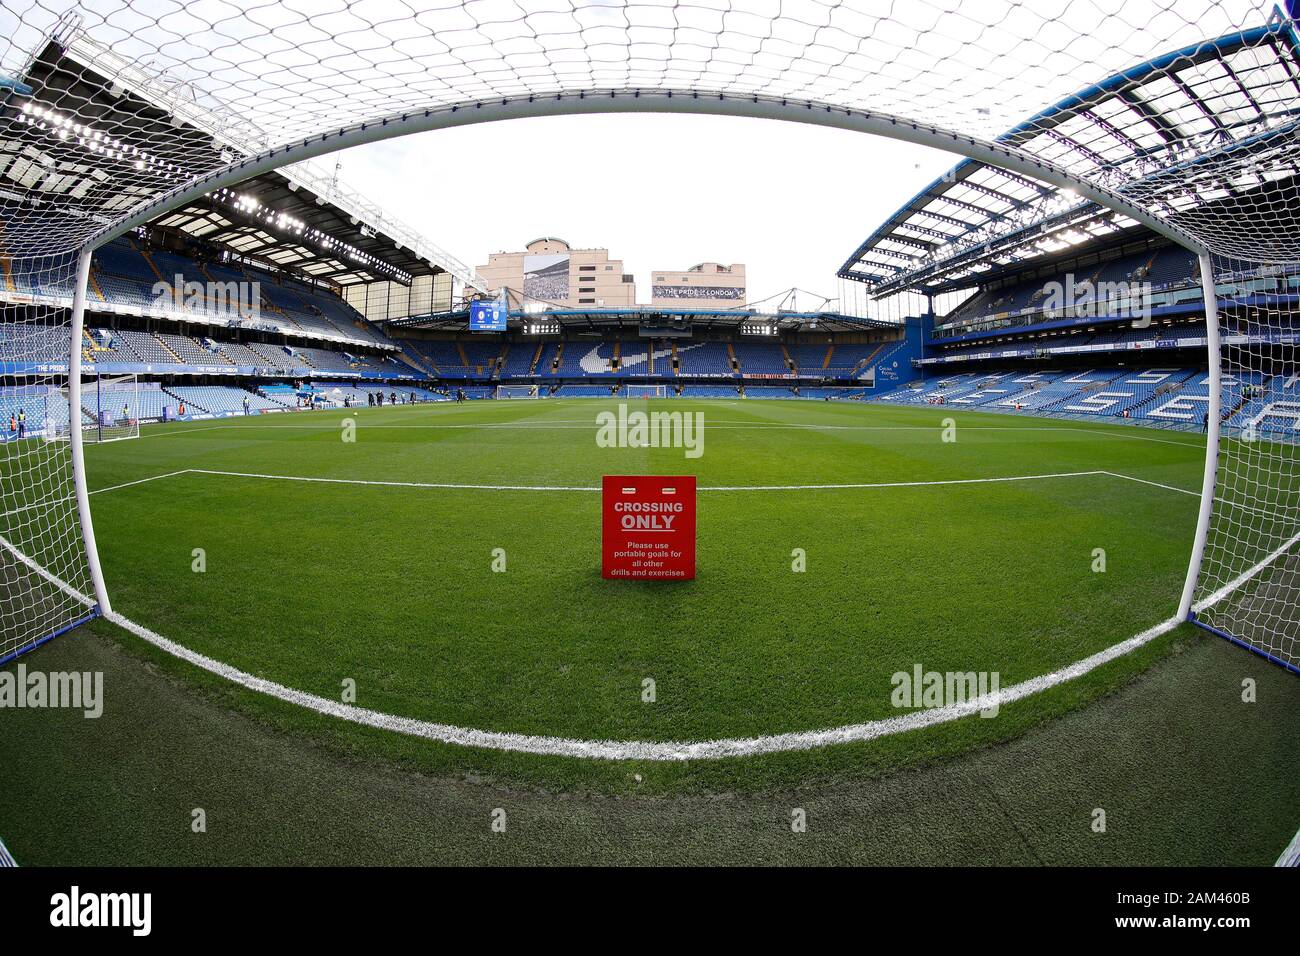 Stamford Bridge Football Stadium for Chelsea Club Editorial Photo